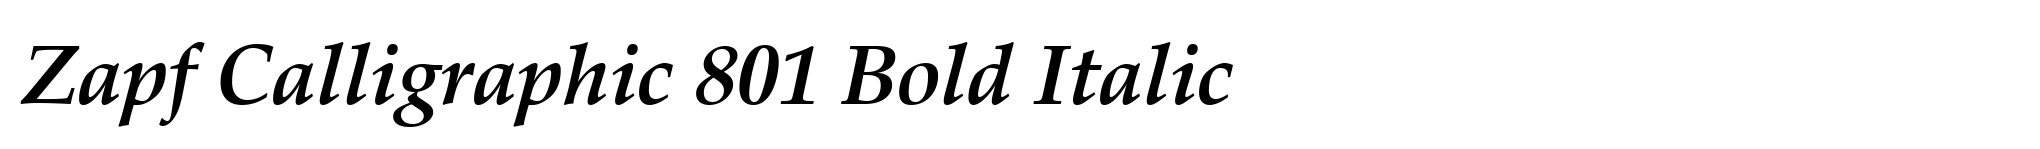 Zapf Calligraphic 801 Bold Italic image